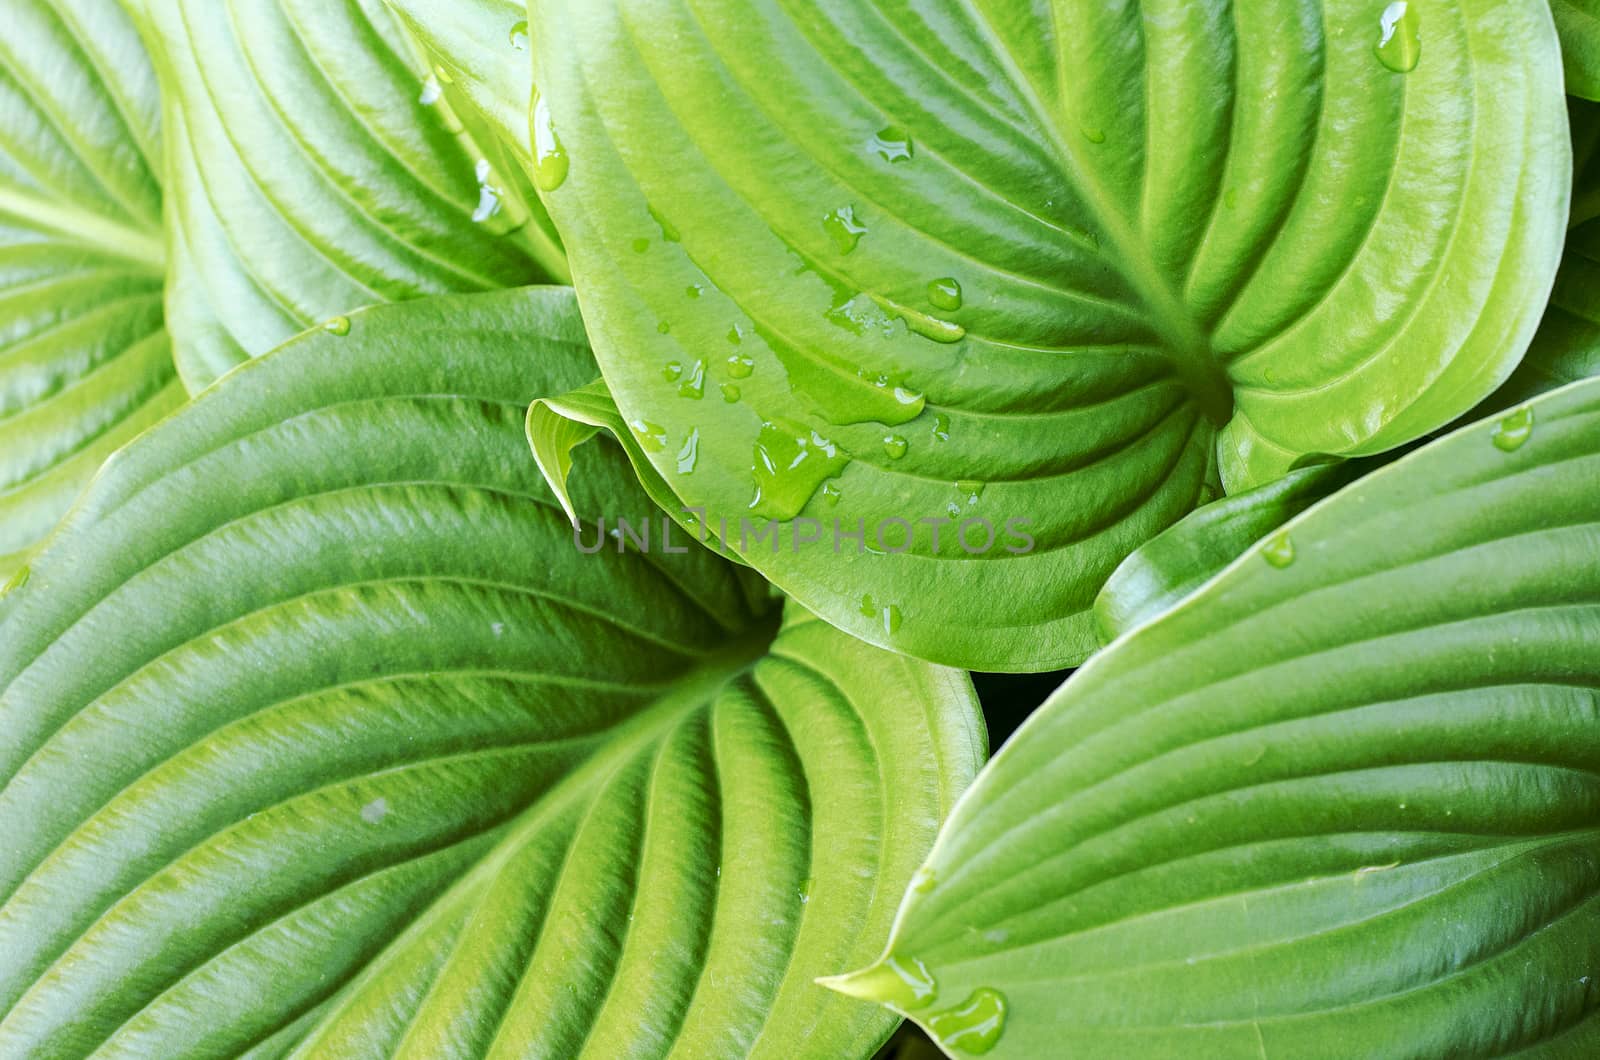 Water drops of hosta leaf